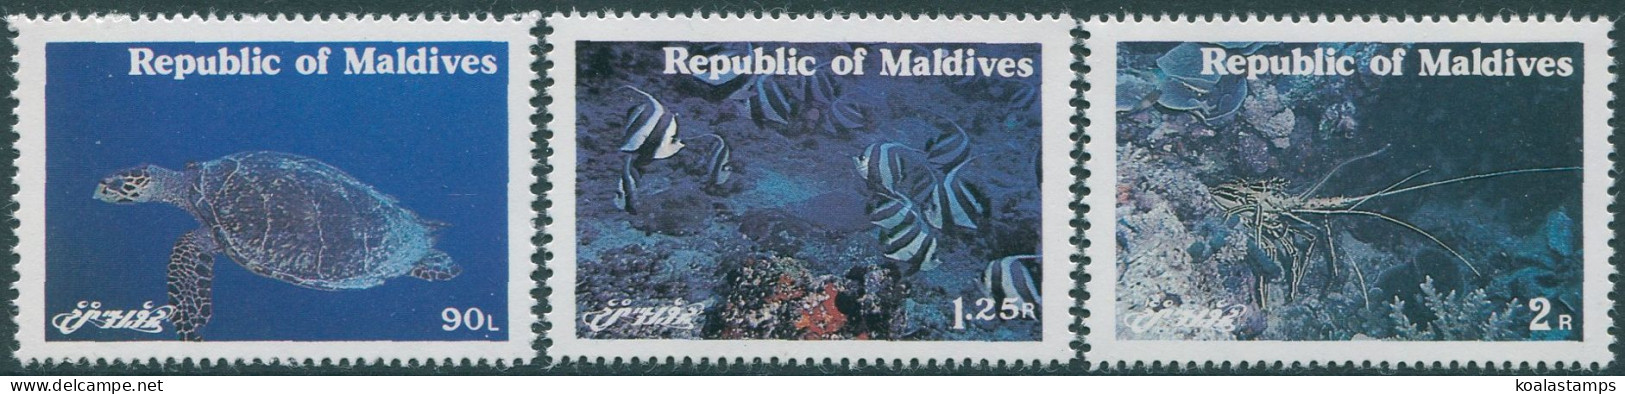 Maldive Islands 1980 SG909-911 Marine Animals Set MNH - Maldives (1965-...)